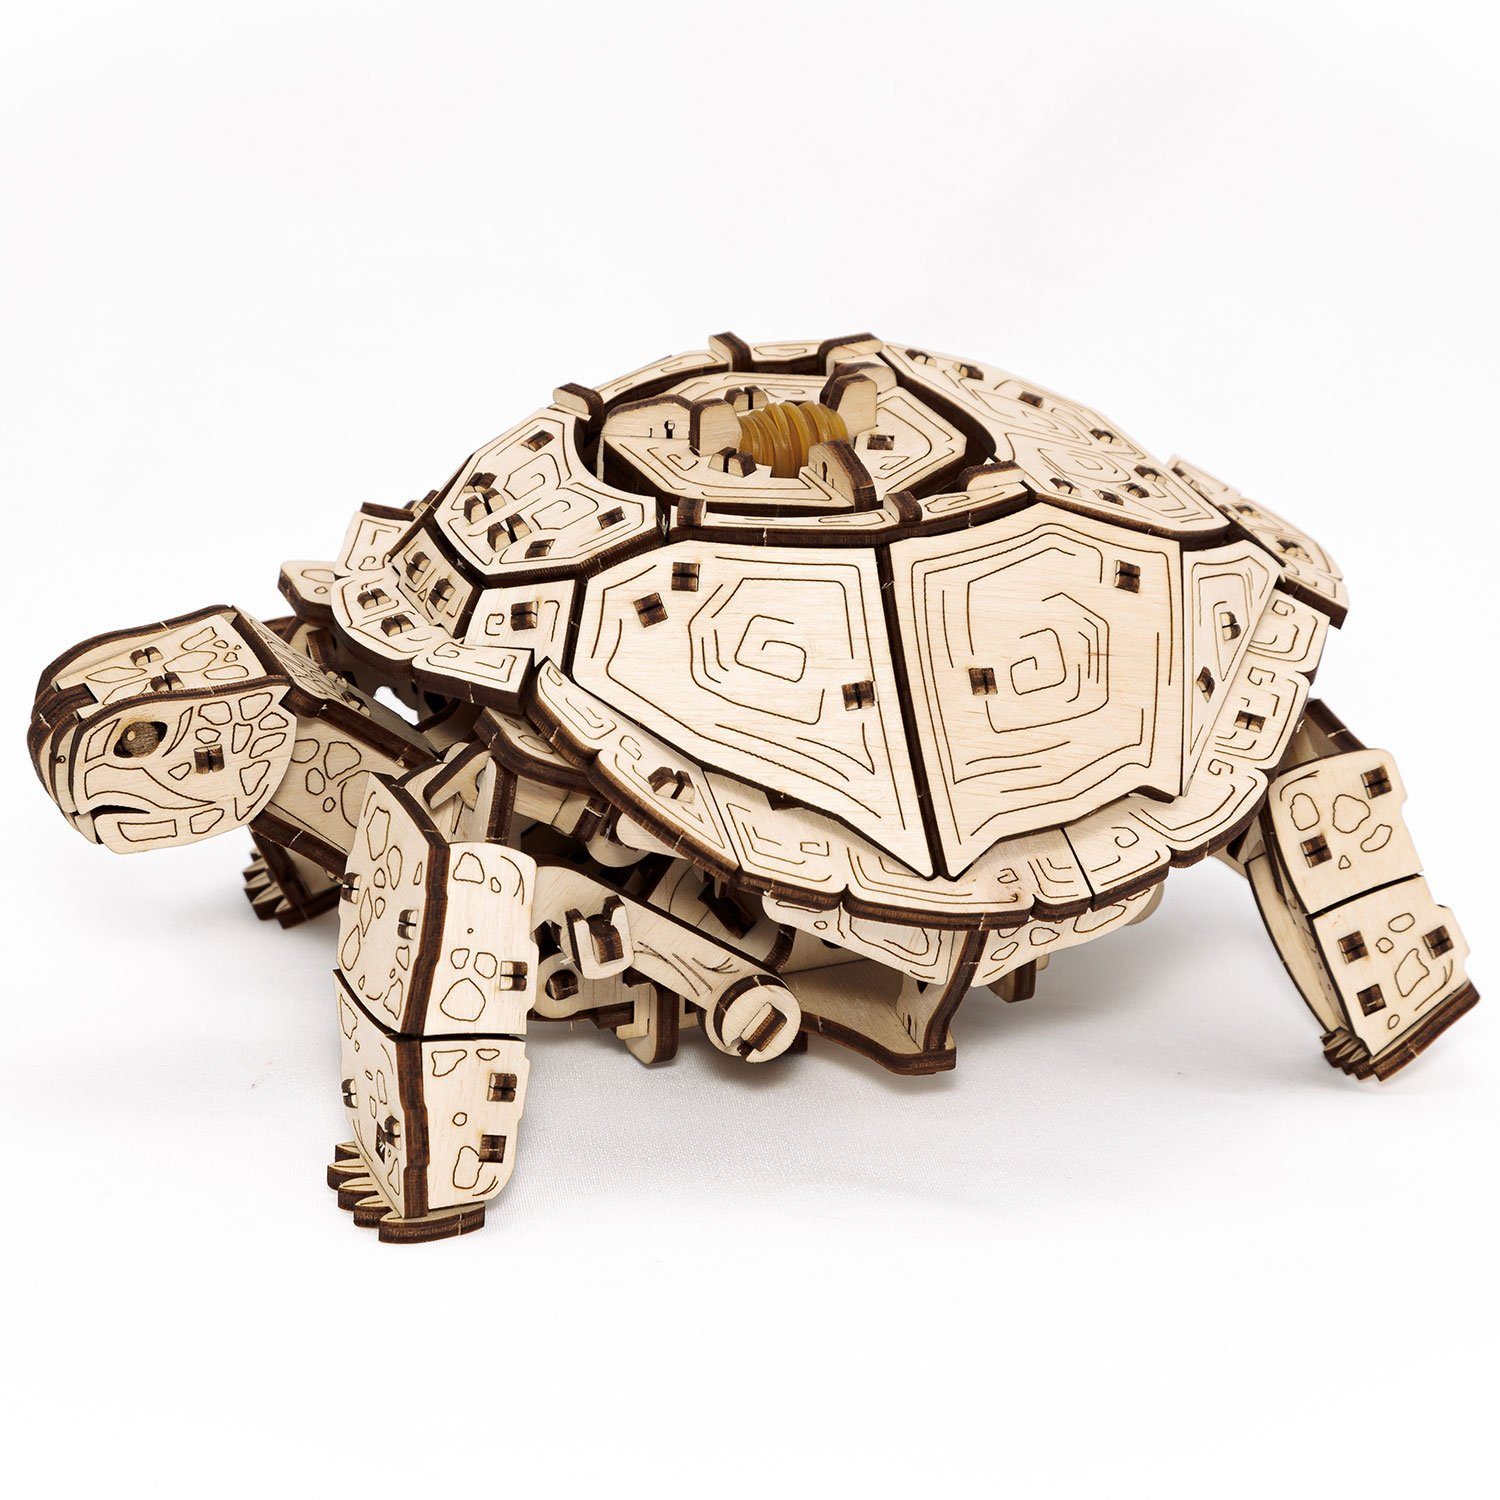 Eco Wood Art 3D-Puzzle Schildkröte – mechanischer Modellbausatz aus Holz, Puzzleteile